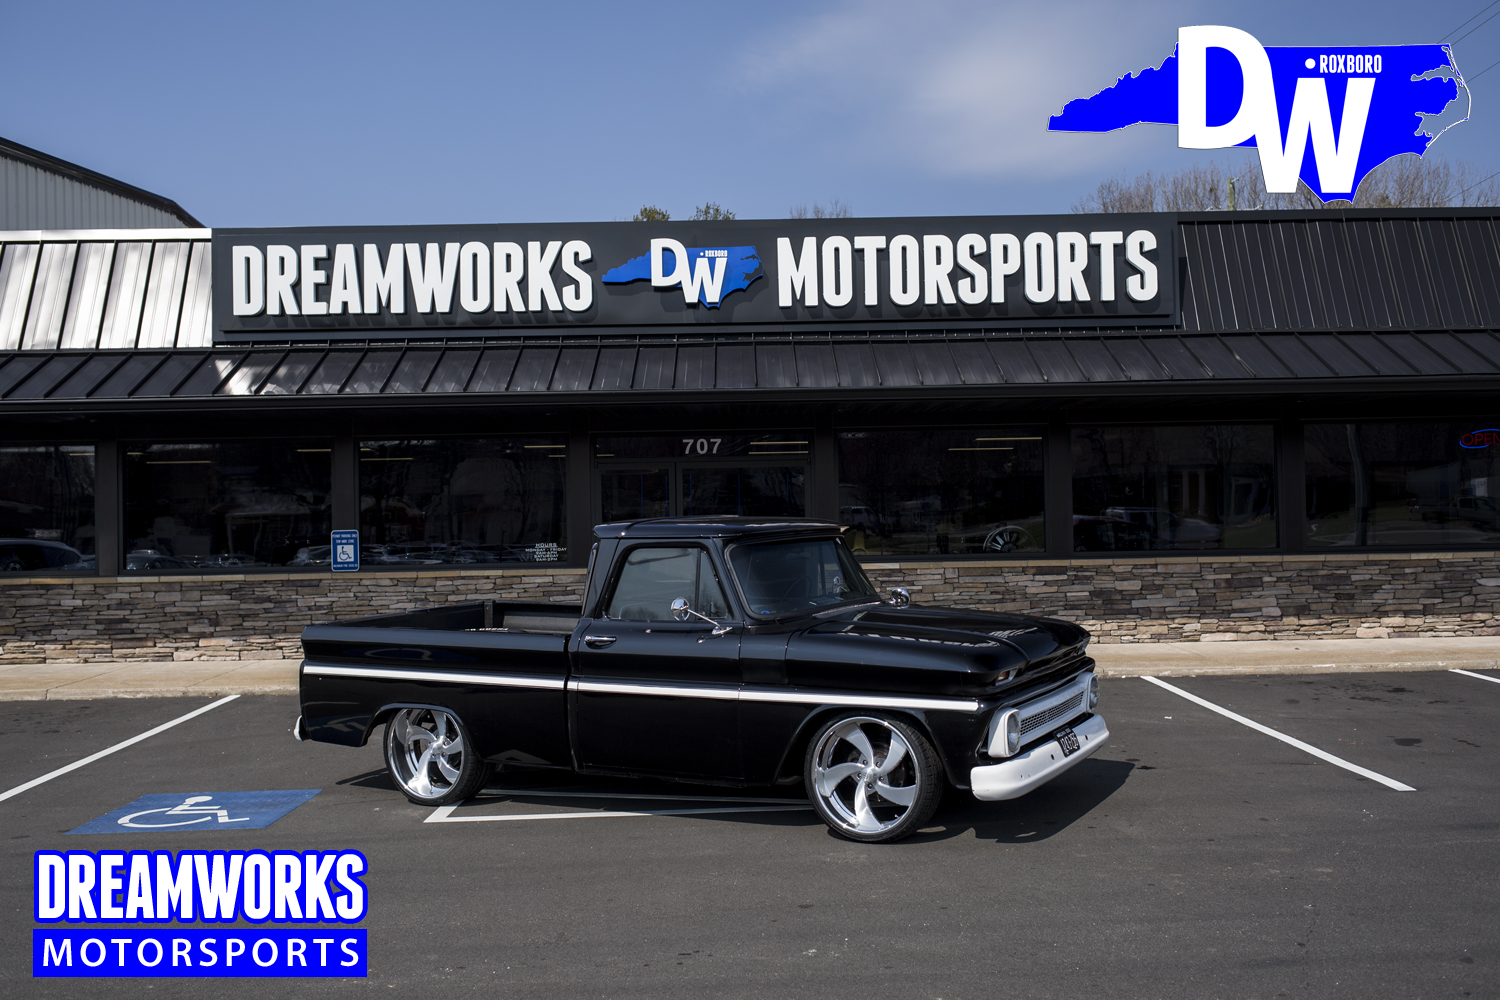 1966_Chevrolet_By_Dreamworks_Motorsports-1.jpg